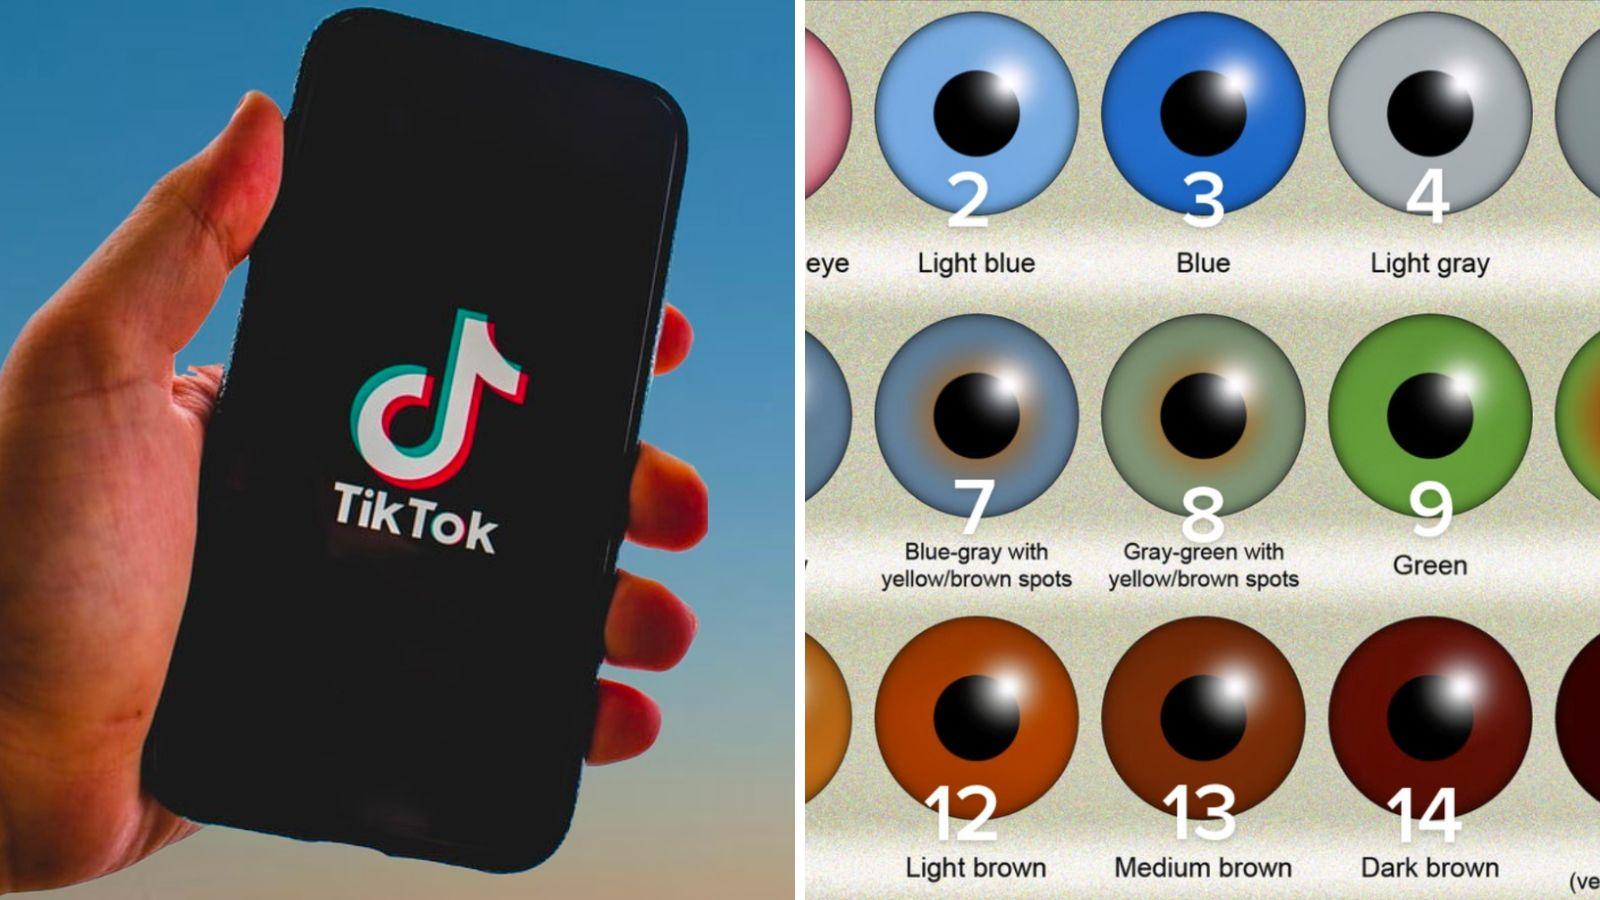 TikTok eye color chart